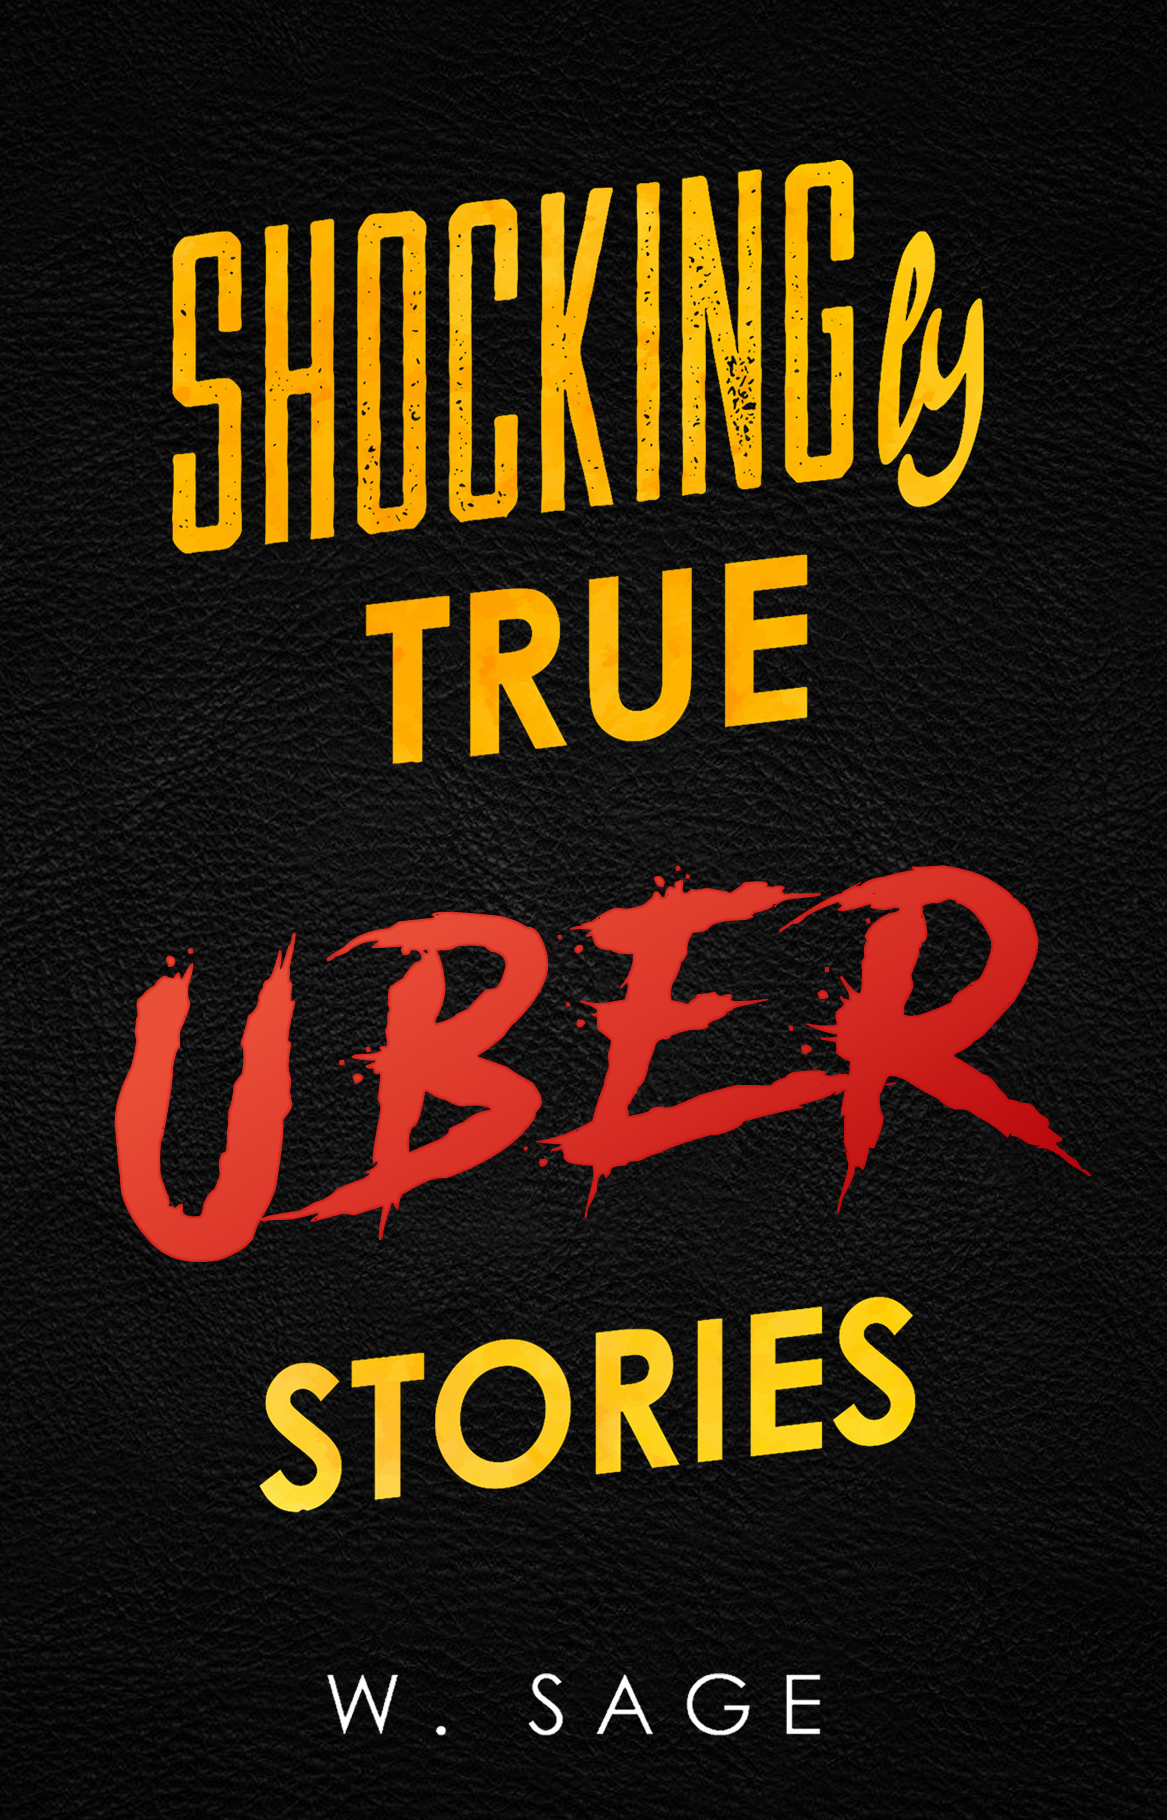 FREE: Shockingly True Uber Stories by W. Sage